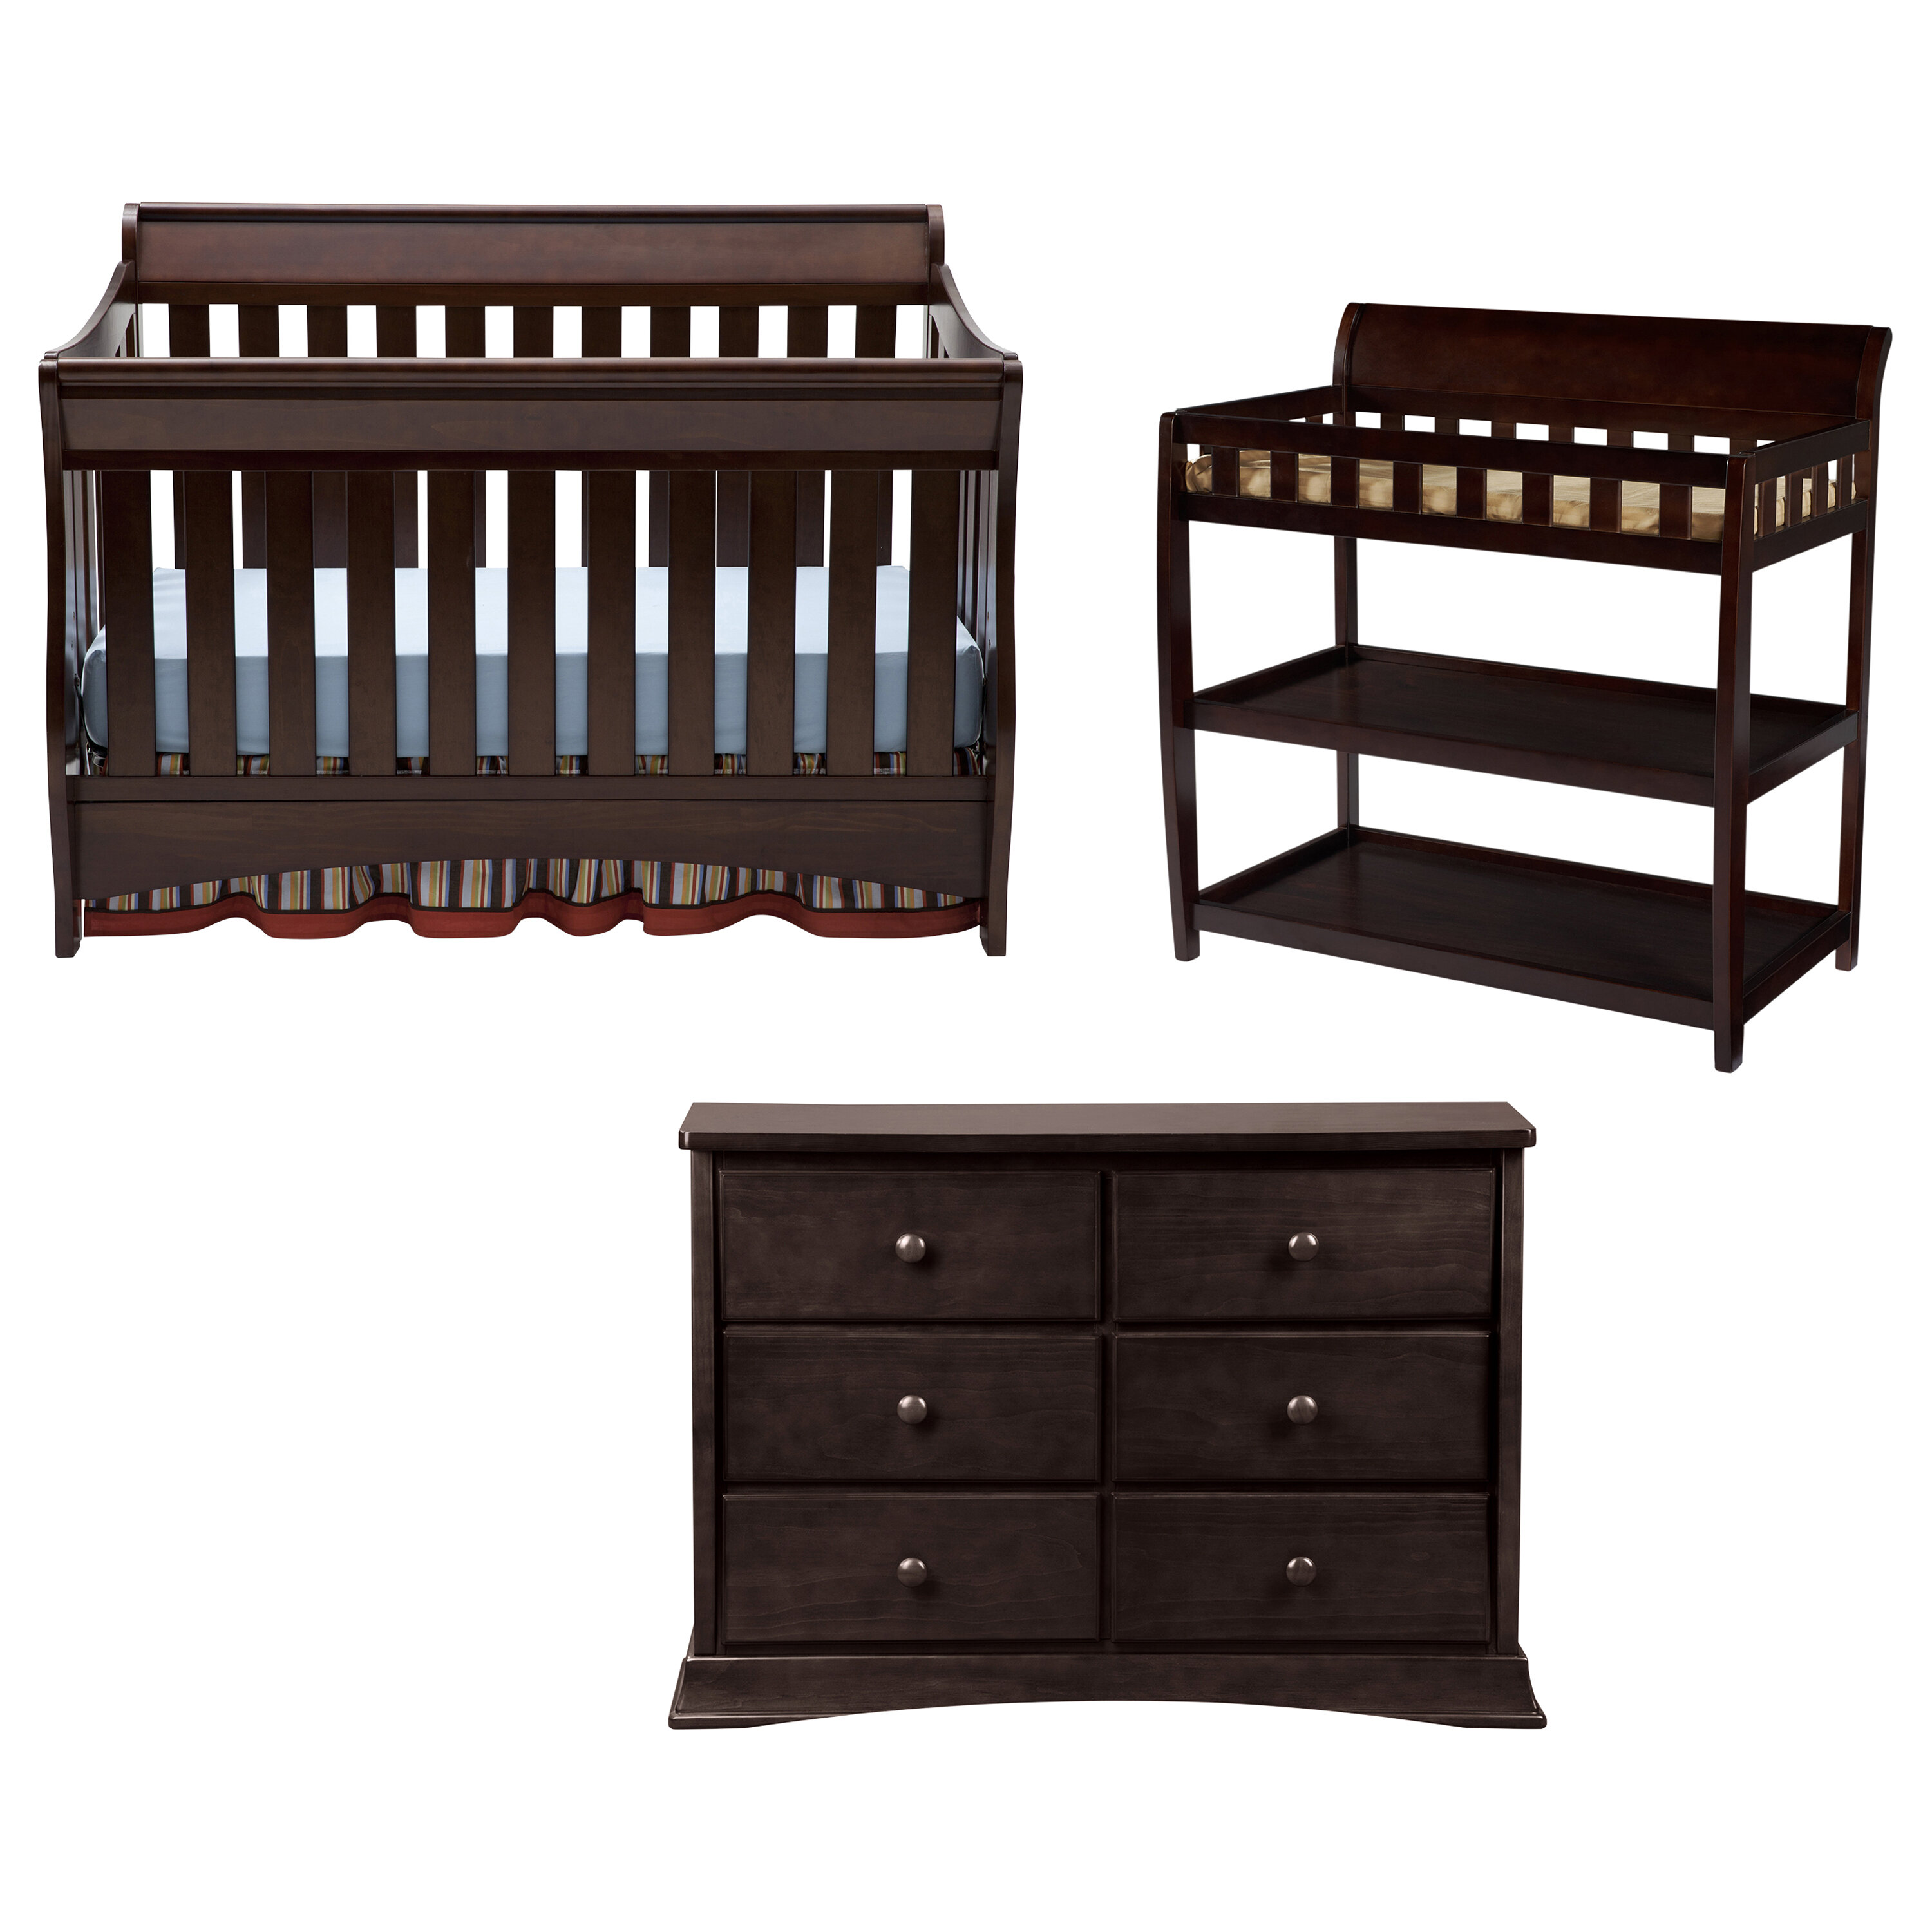 delta crib and dresser set